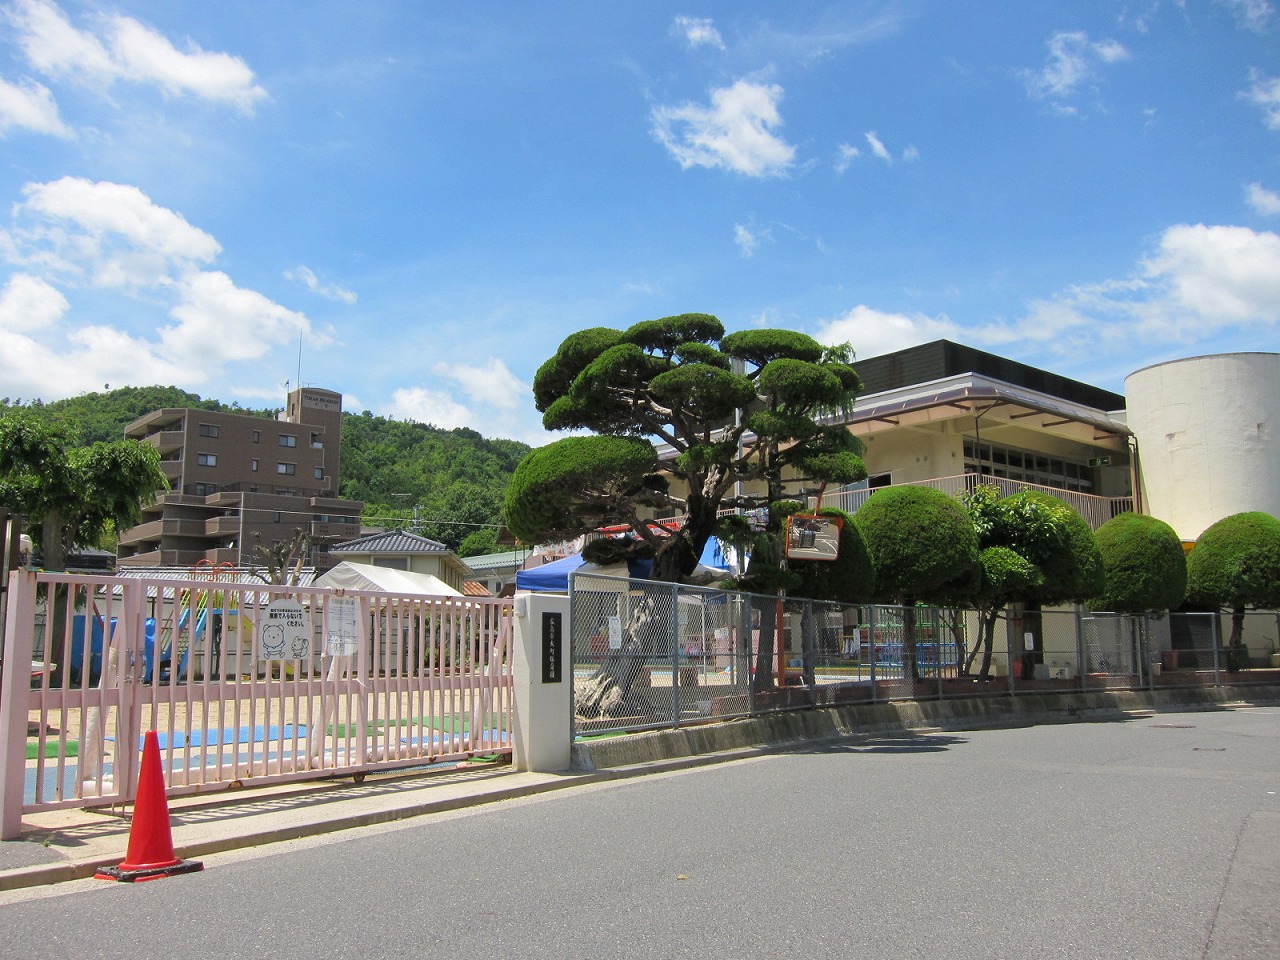 kindergarten ・ Nursery. Omachi nursery school (kindergarten ・ 330m to the nursery)